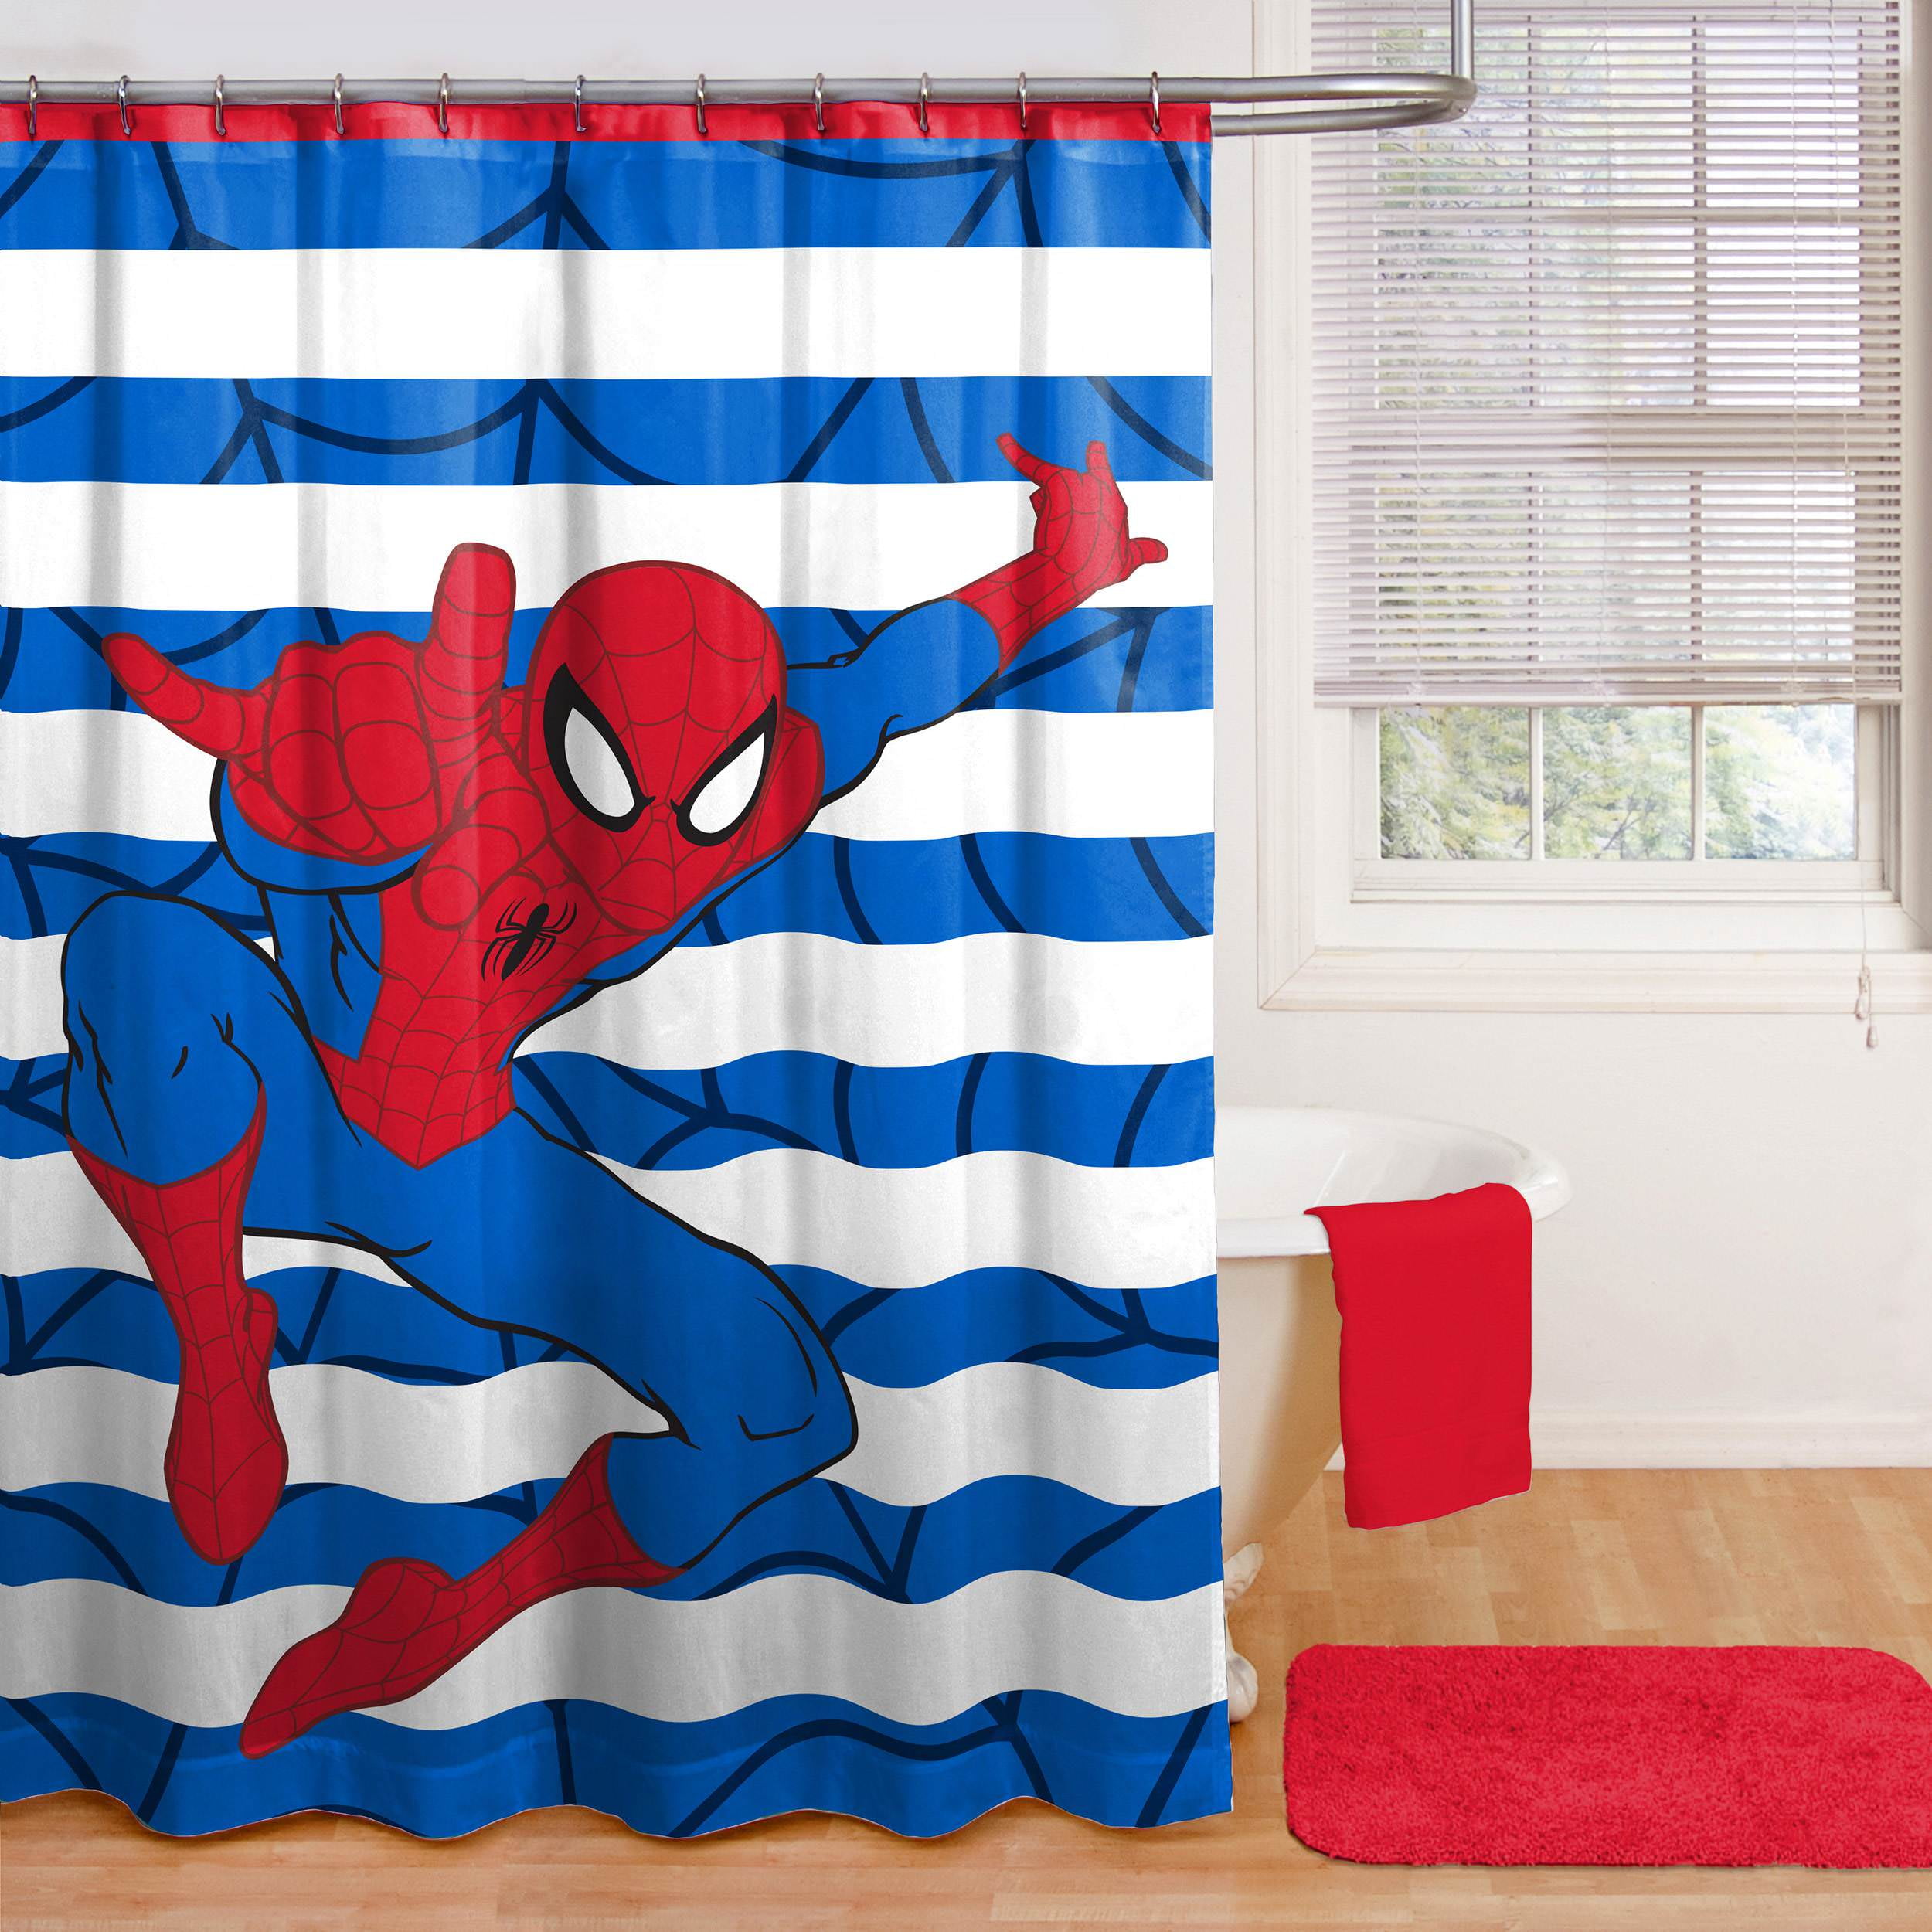 Details about   Spider-Man Design Shower Curtain 3D Print Waterproof Bath Curtain Bathroom Decor 